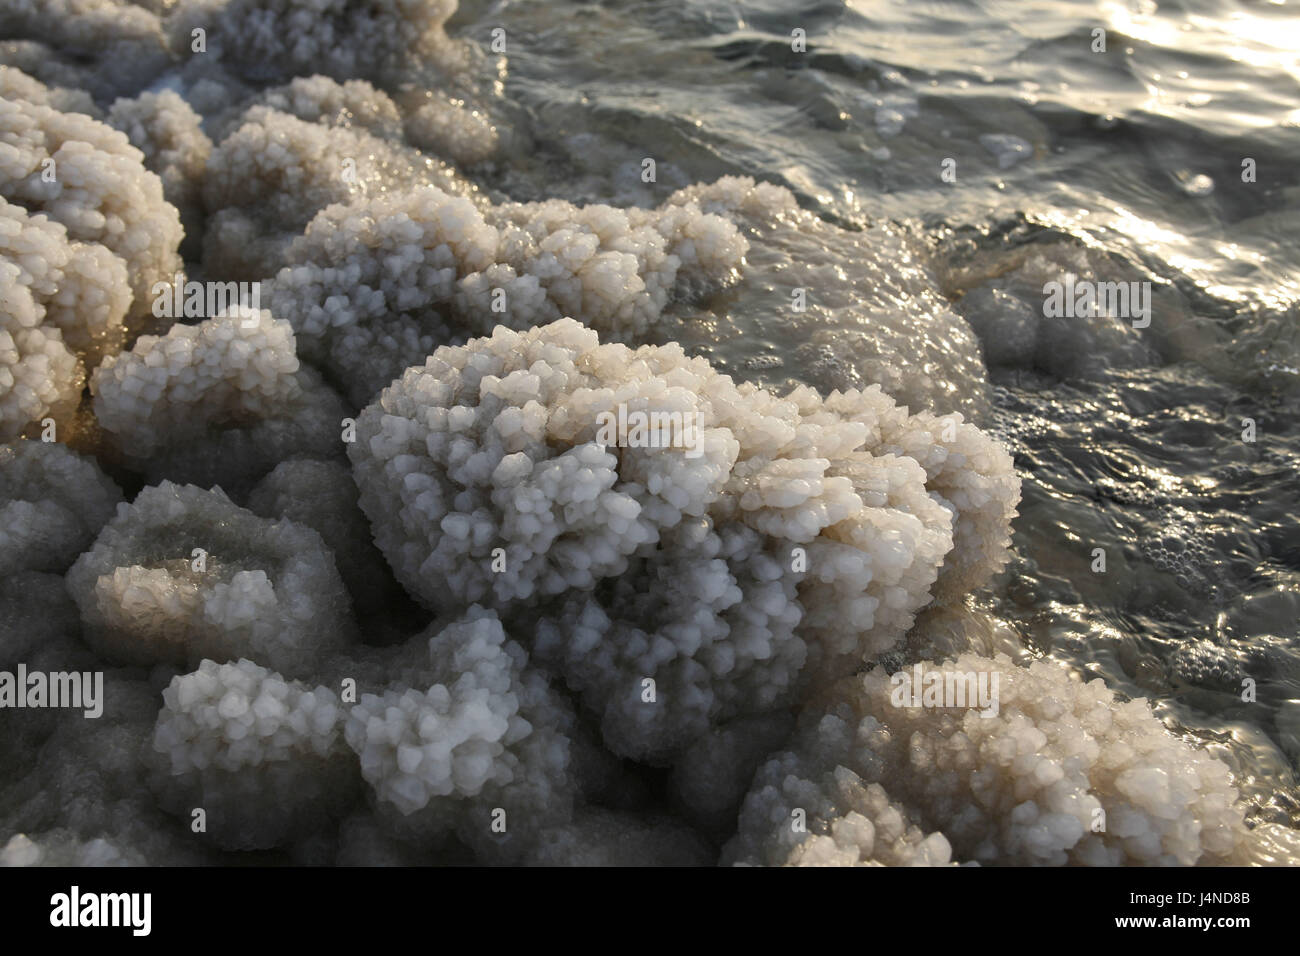 The Middle East, Jordan, dead sea, salt deposits, Stock Photo